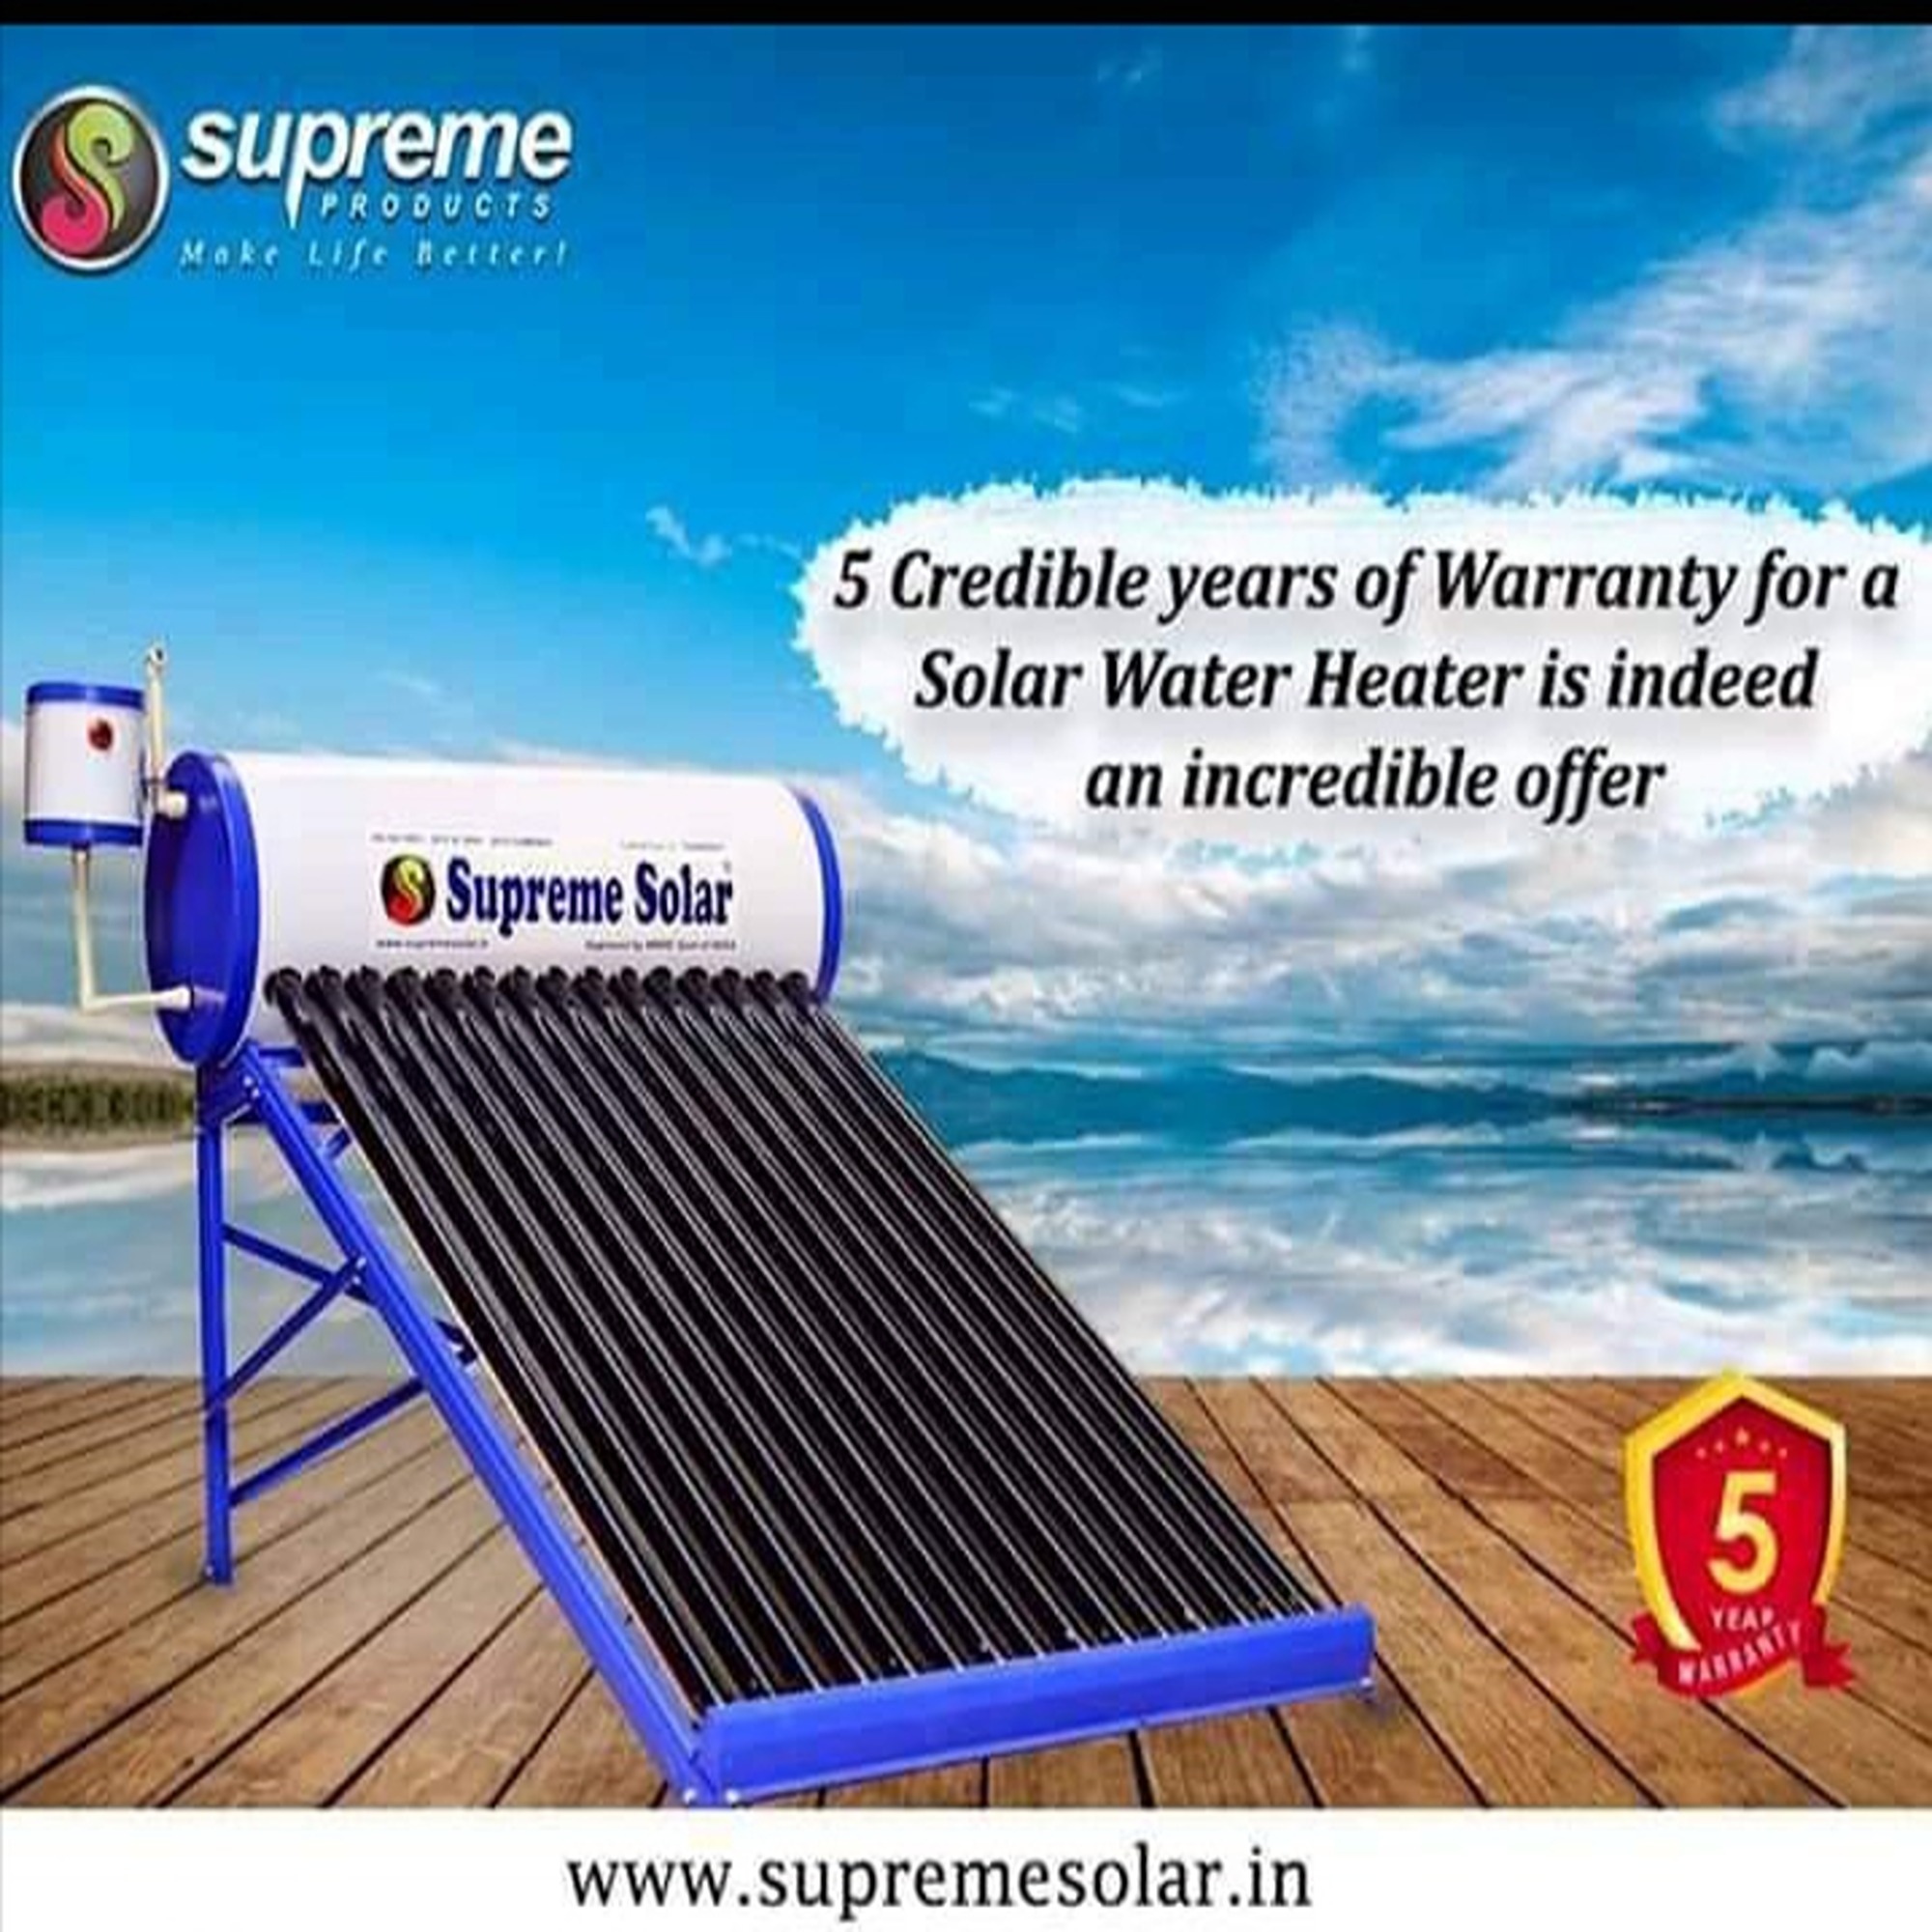 Supreme Solar 150 Ltr Cerami Coated Water Heater